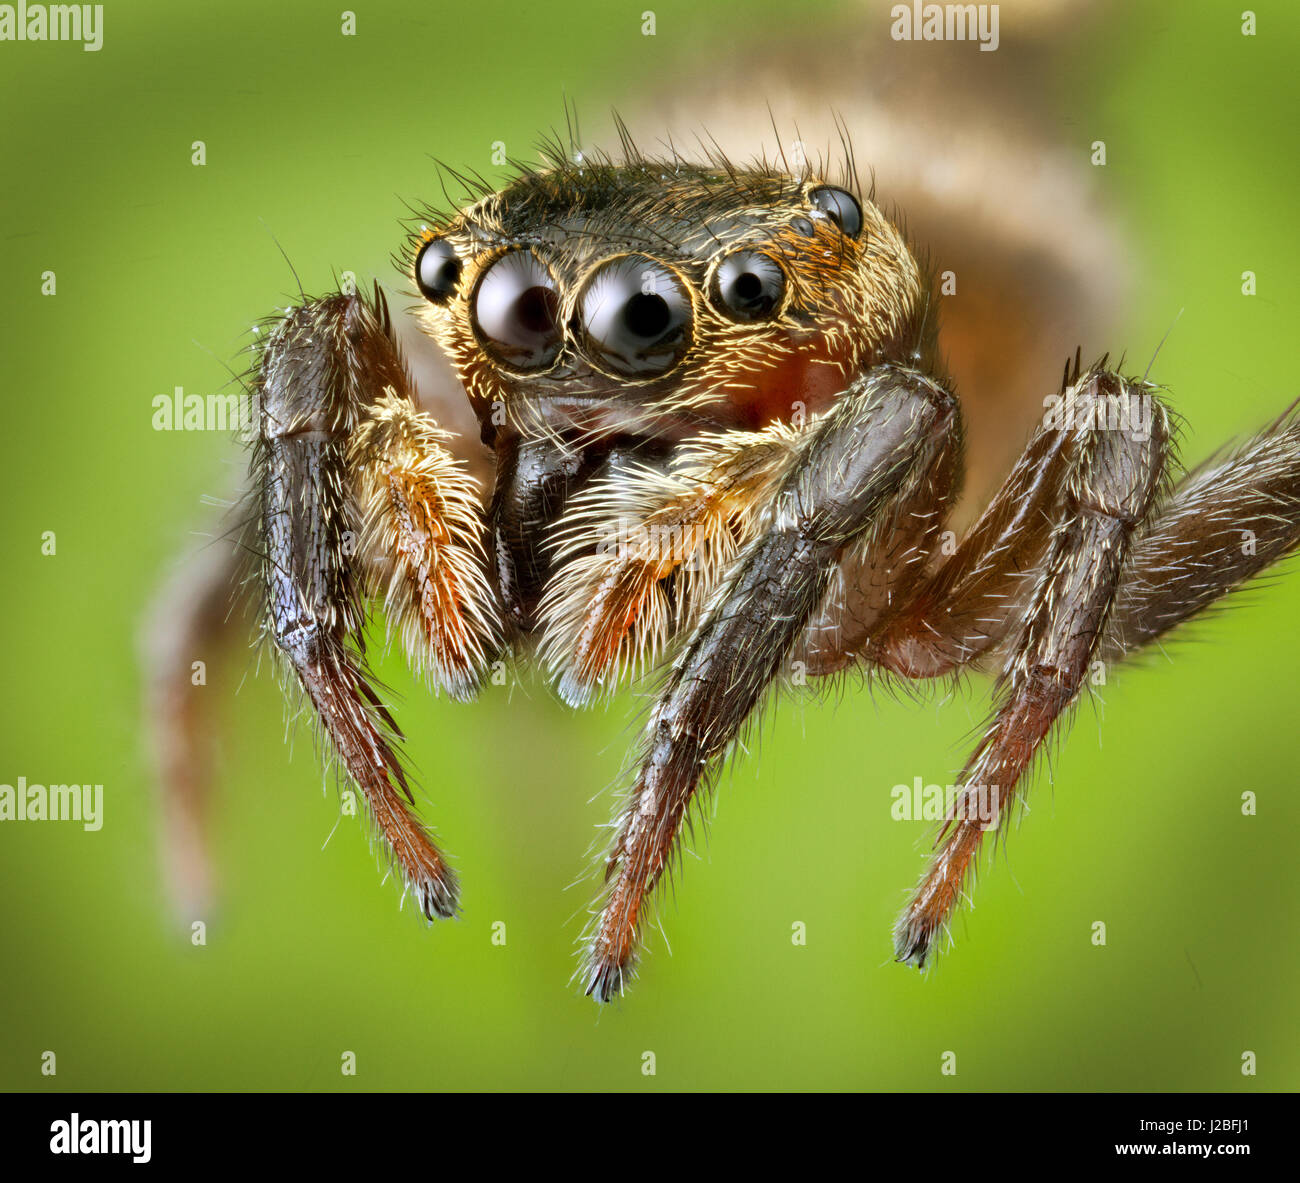 Malaysia jumping spider, Salticidae, high macro 'stacked' image, Stock Photo